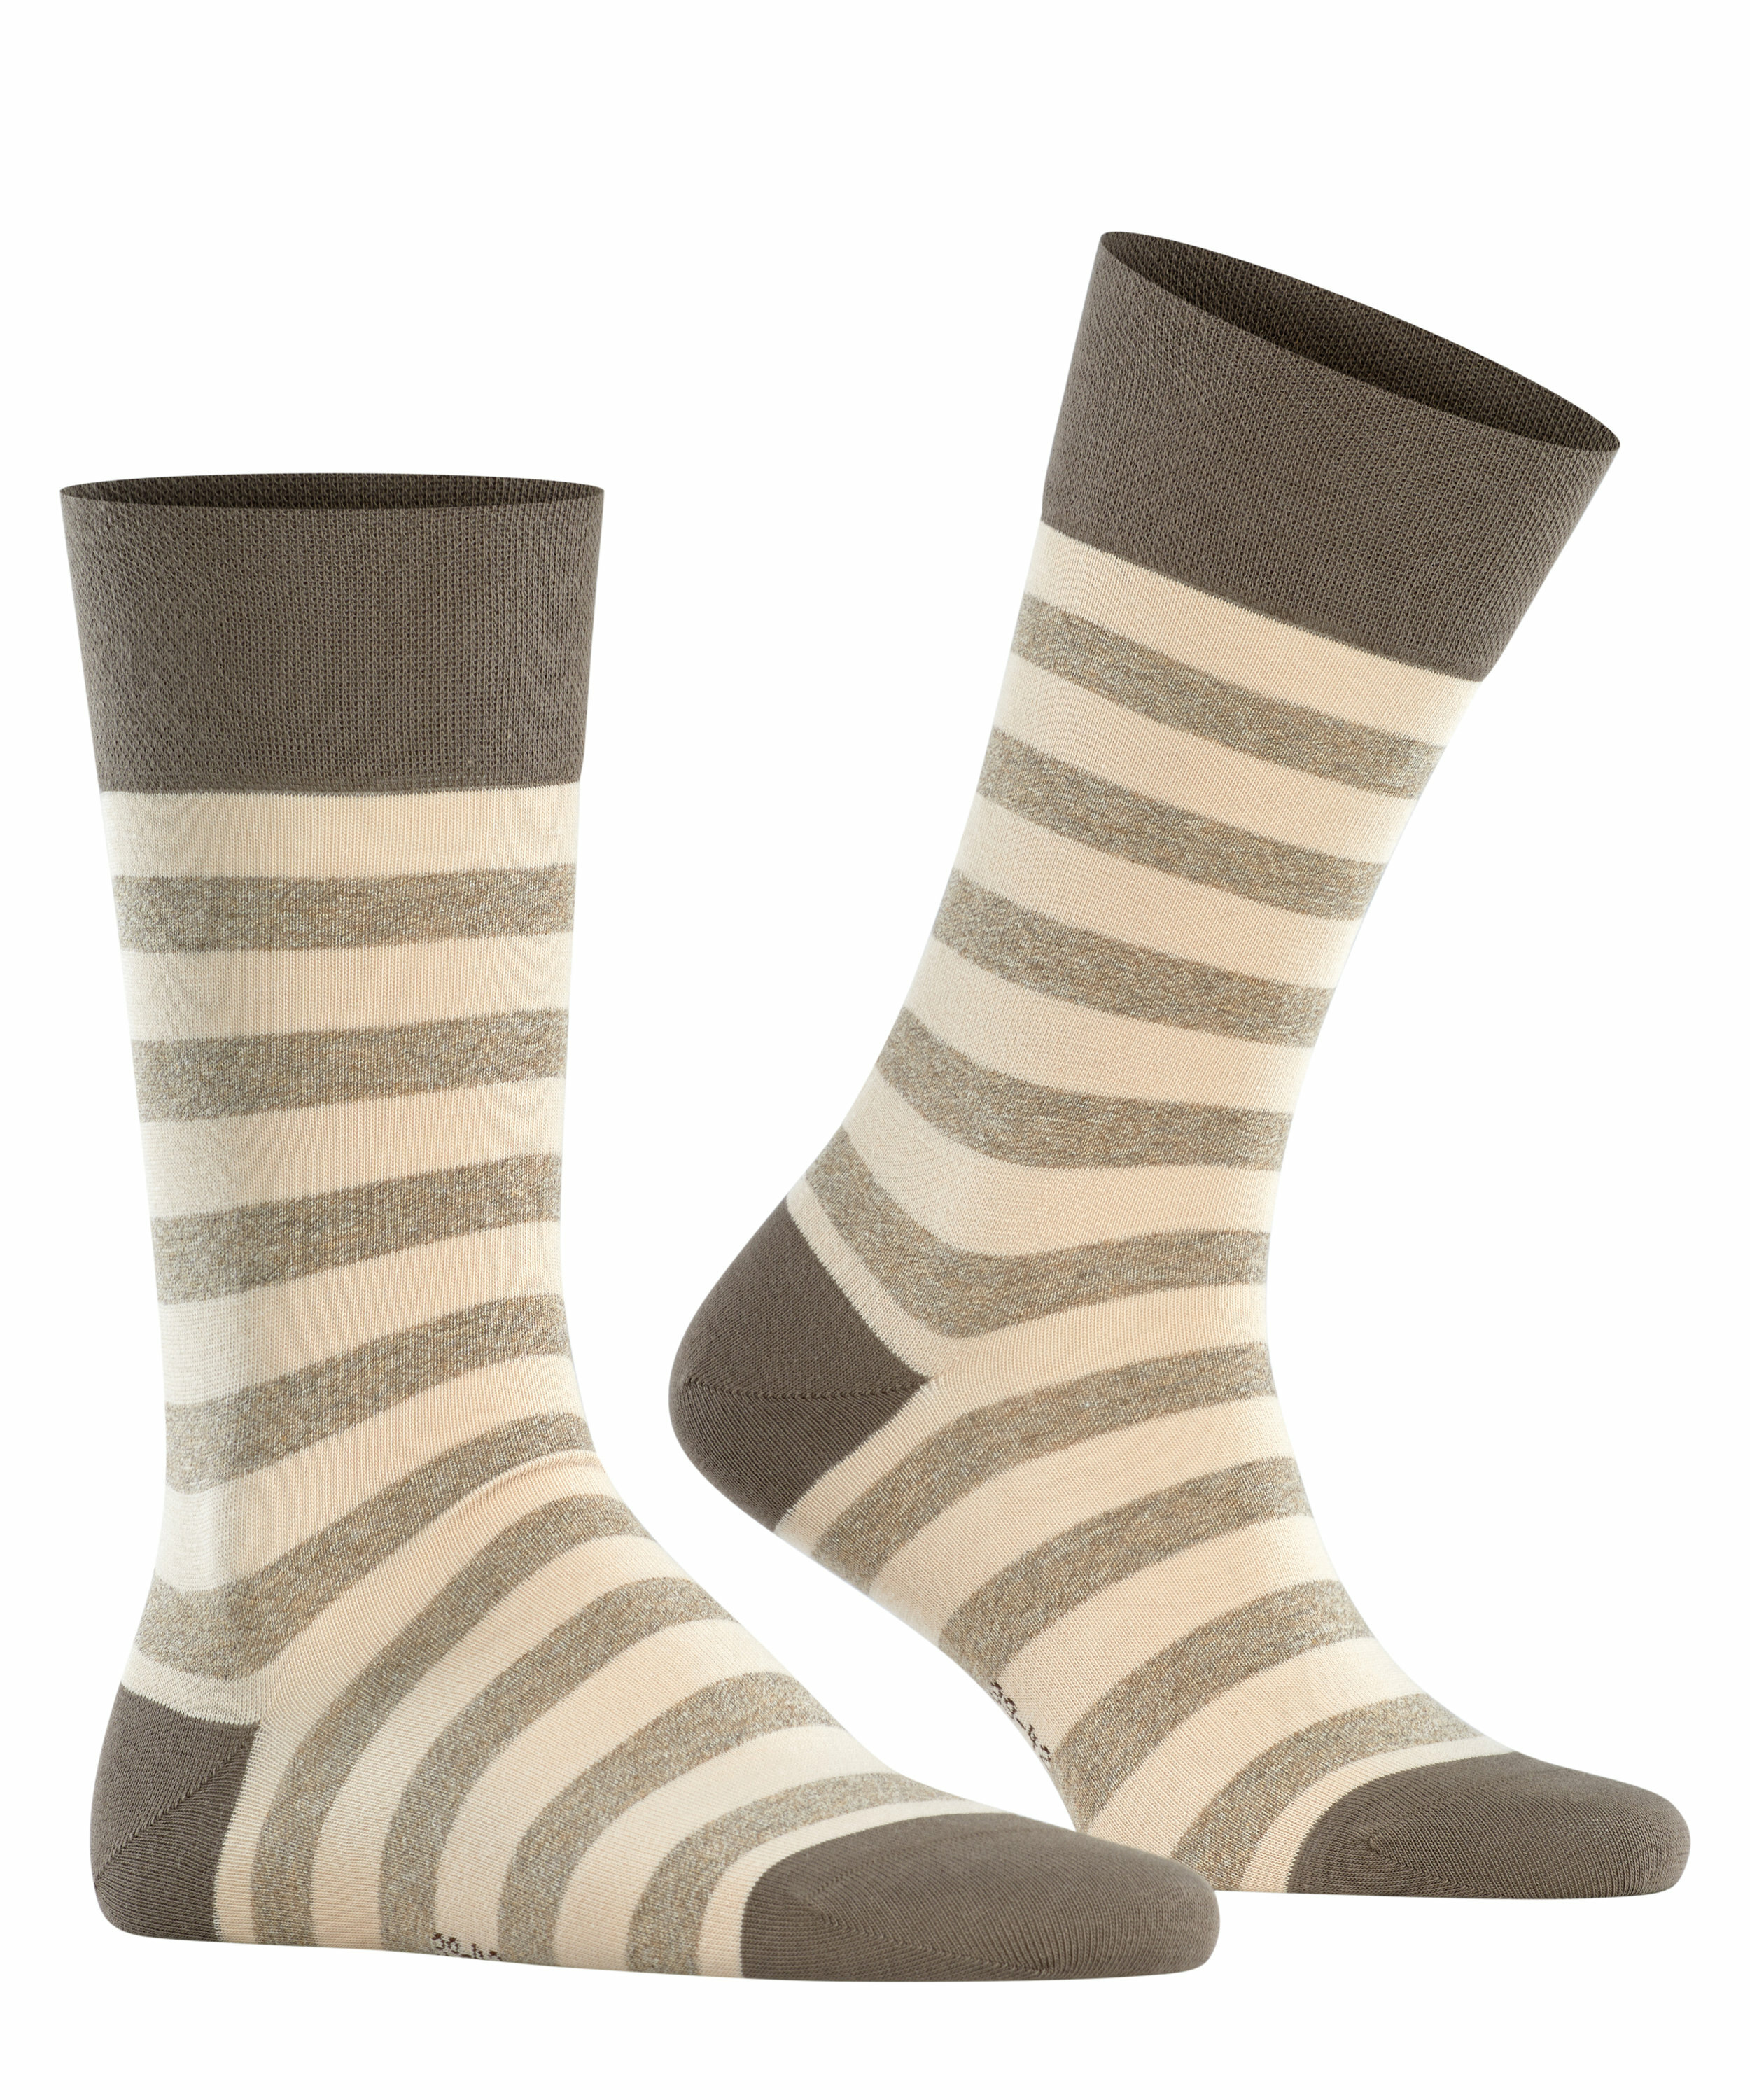 Baumwoll-Socke "Sensitive Mapped Line" ohne Gummi-Druck